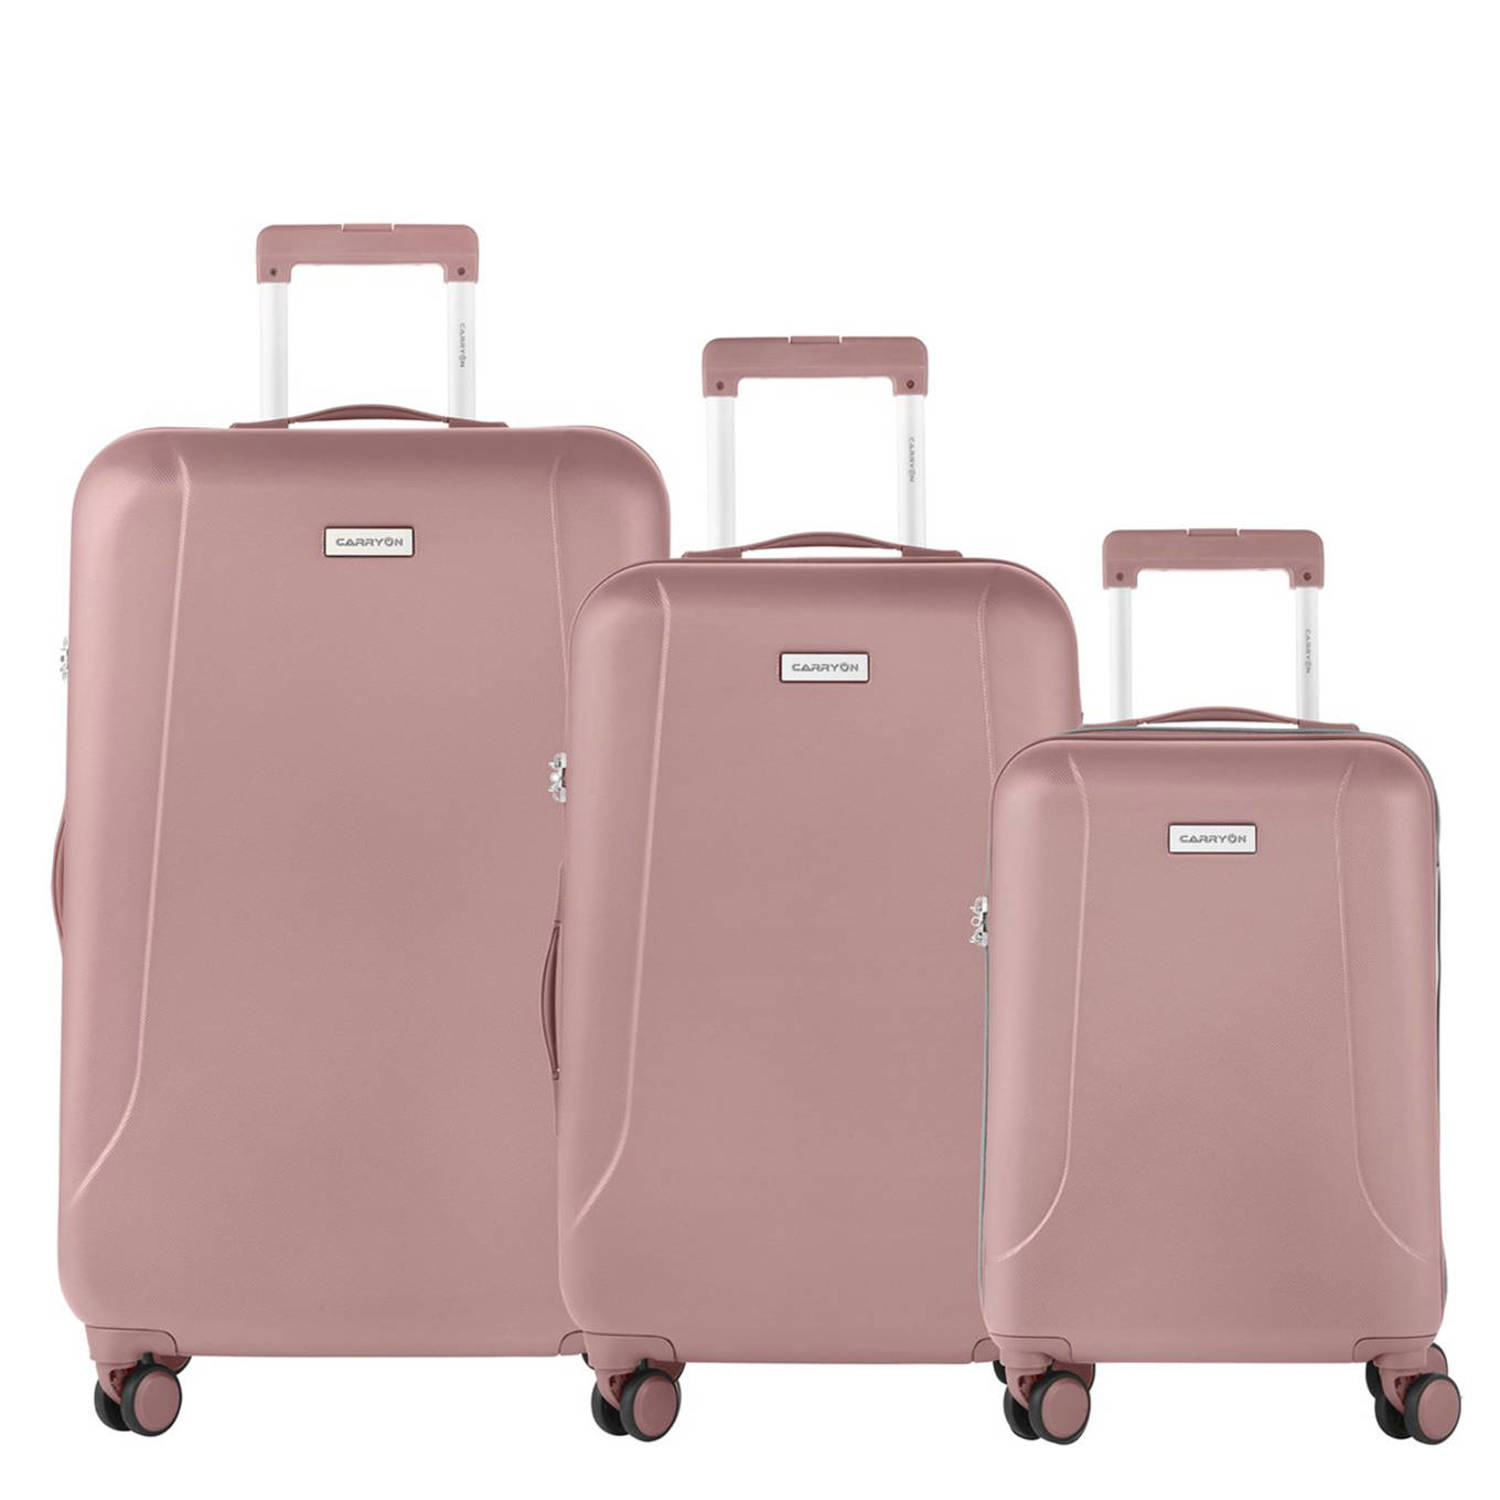 CarryOn trolleyset Skyhopper 3 stuks roze